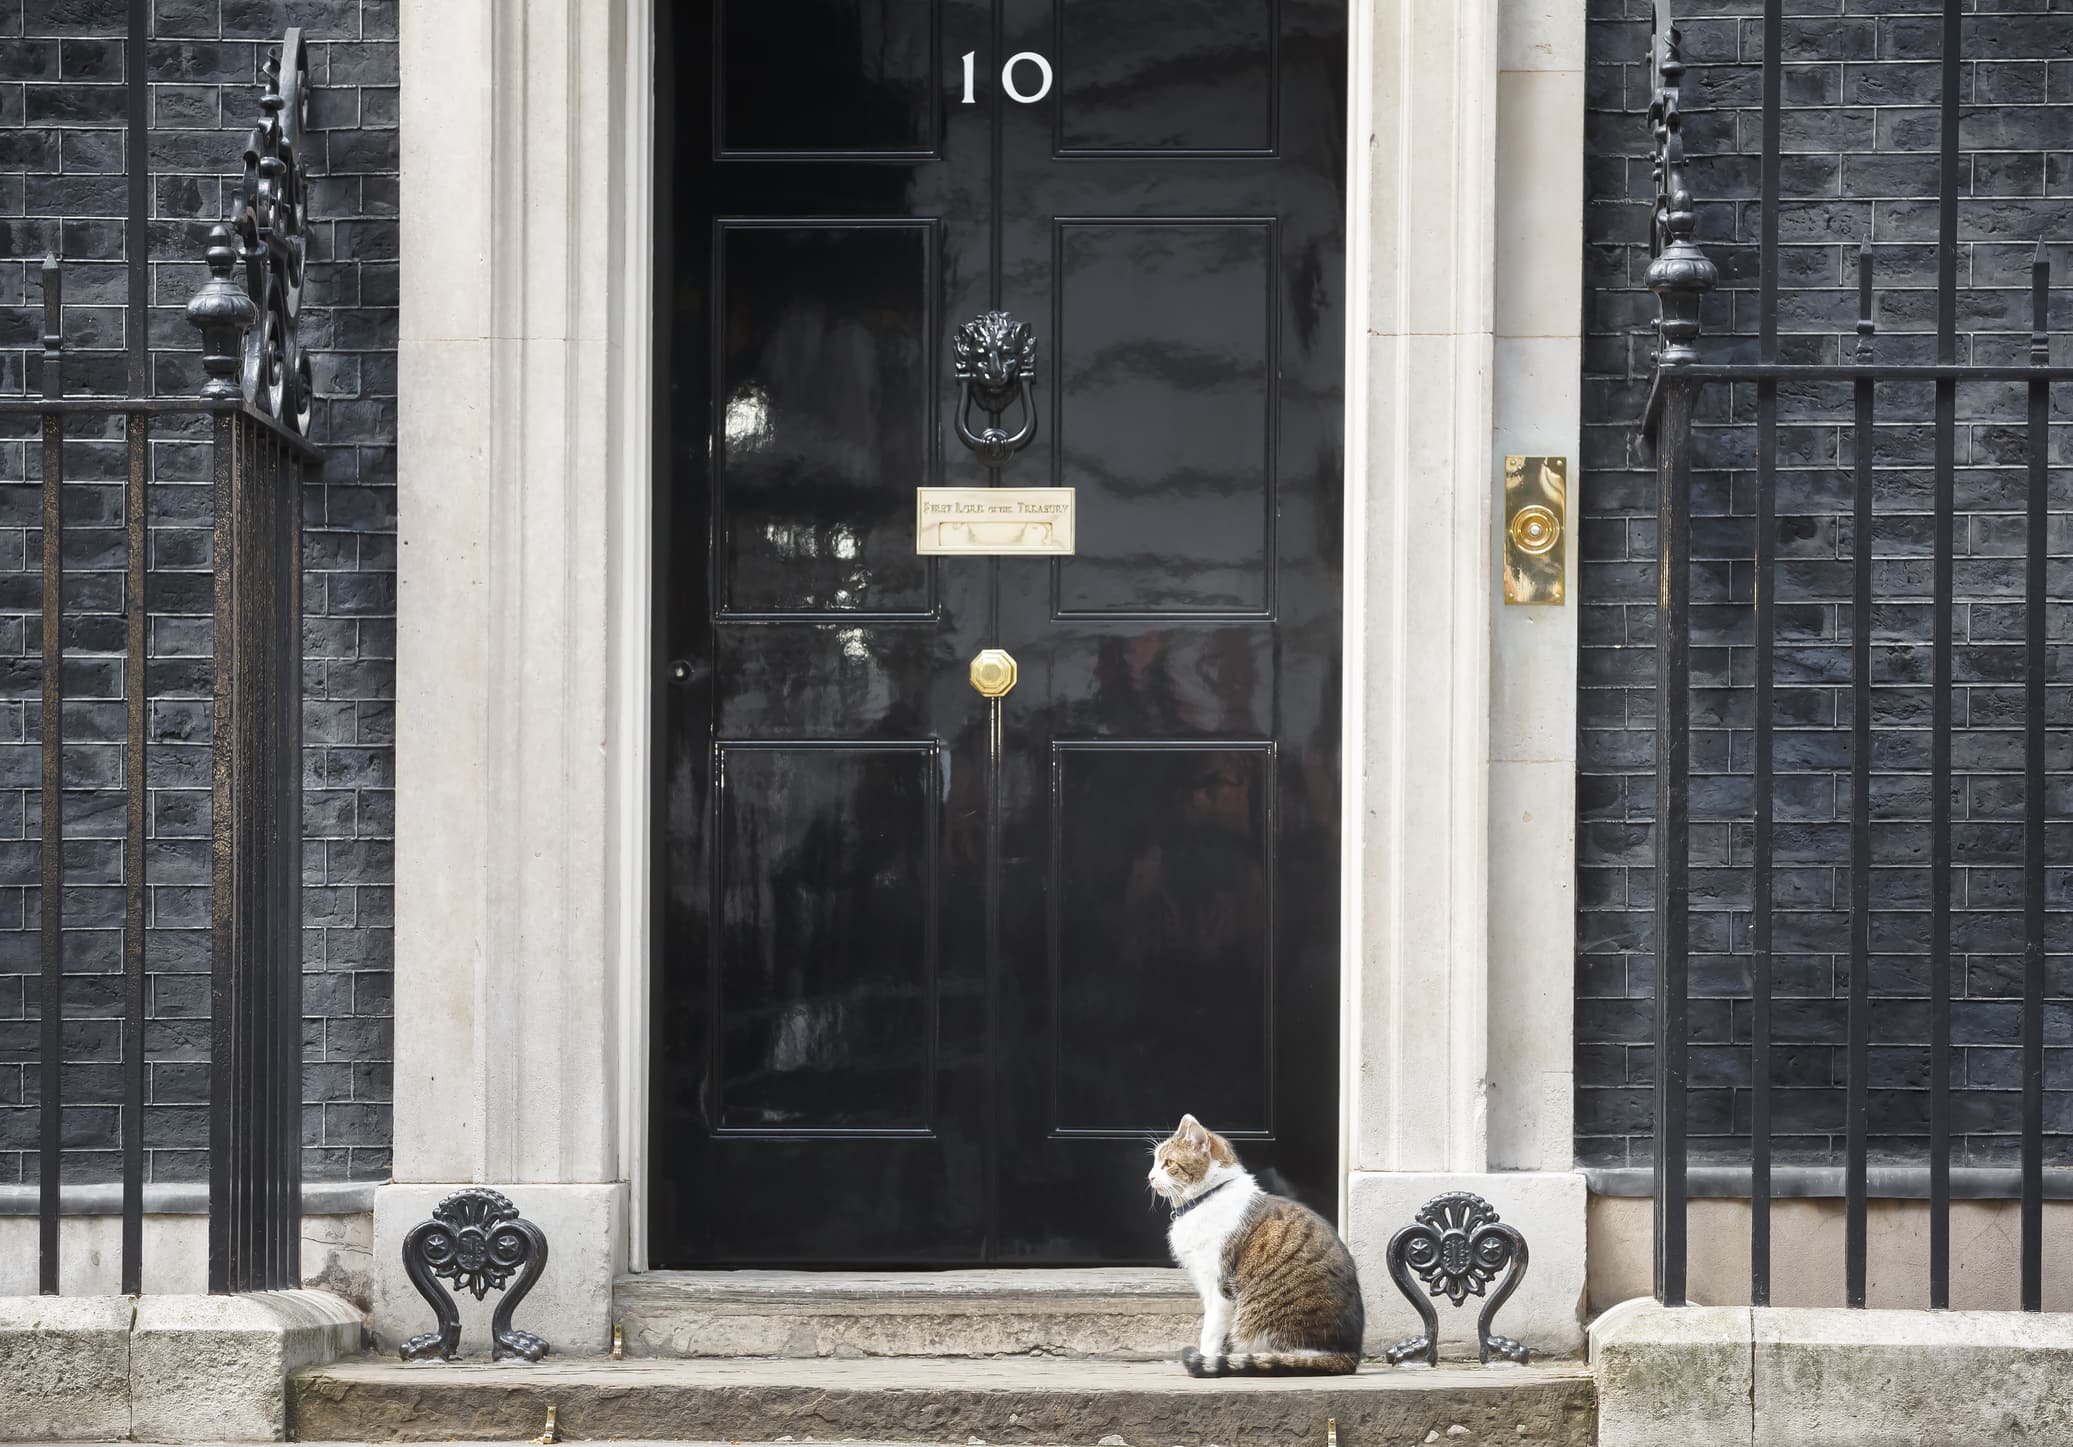 Larry - 10 Downing Street